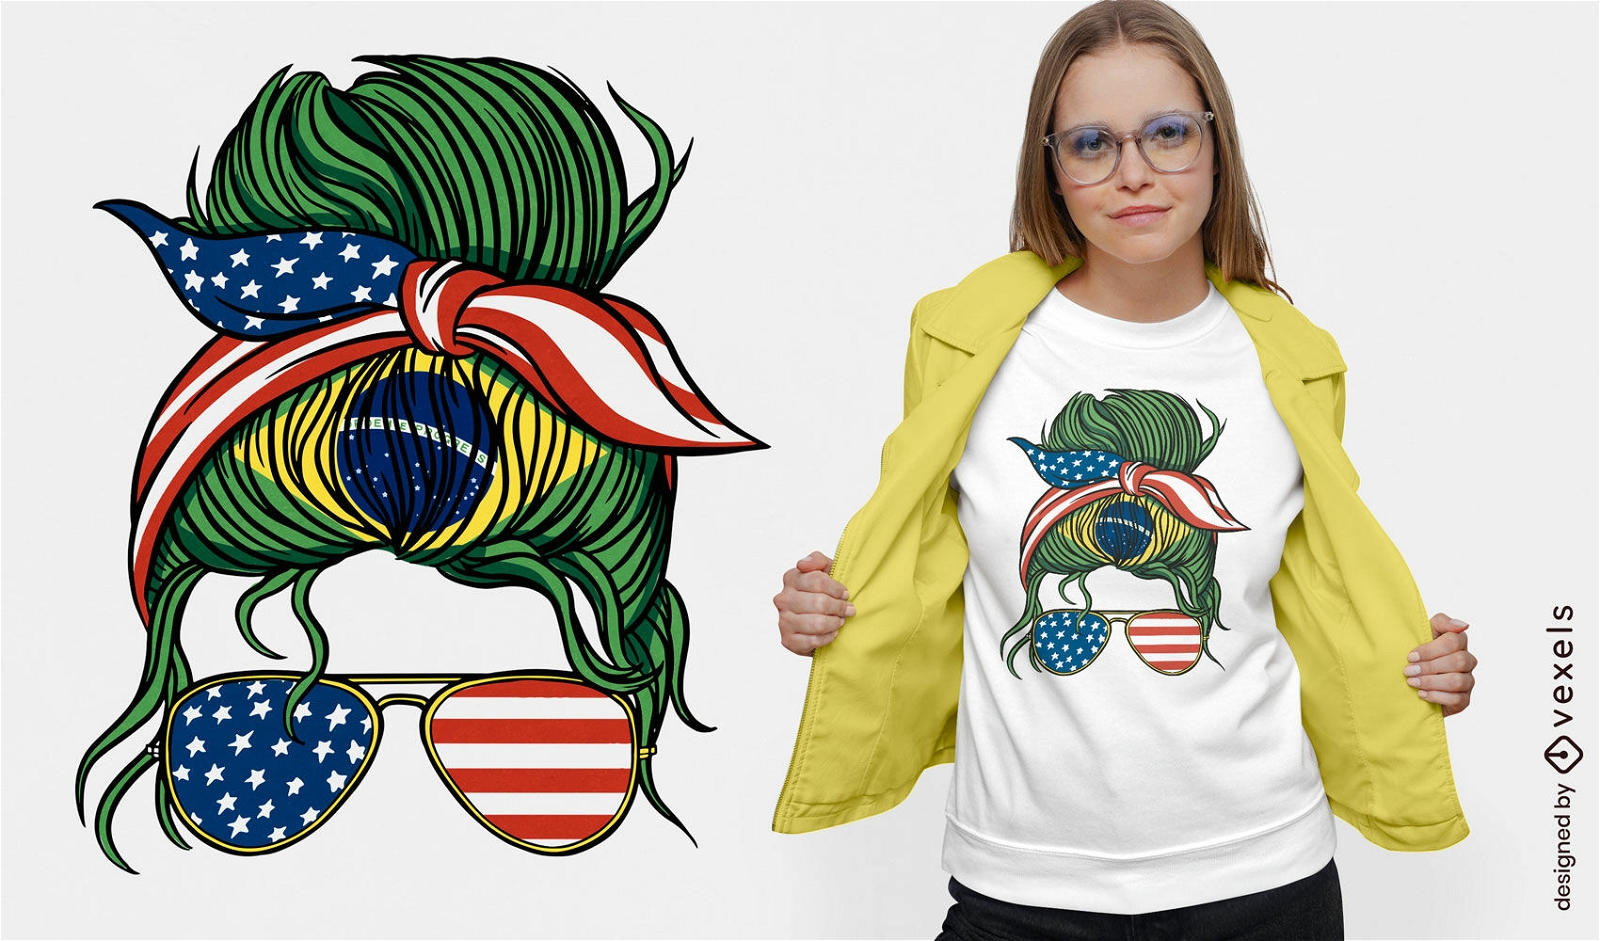 Brazil and USA bandana t-shirt design